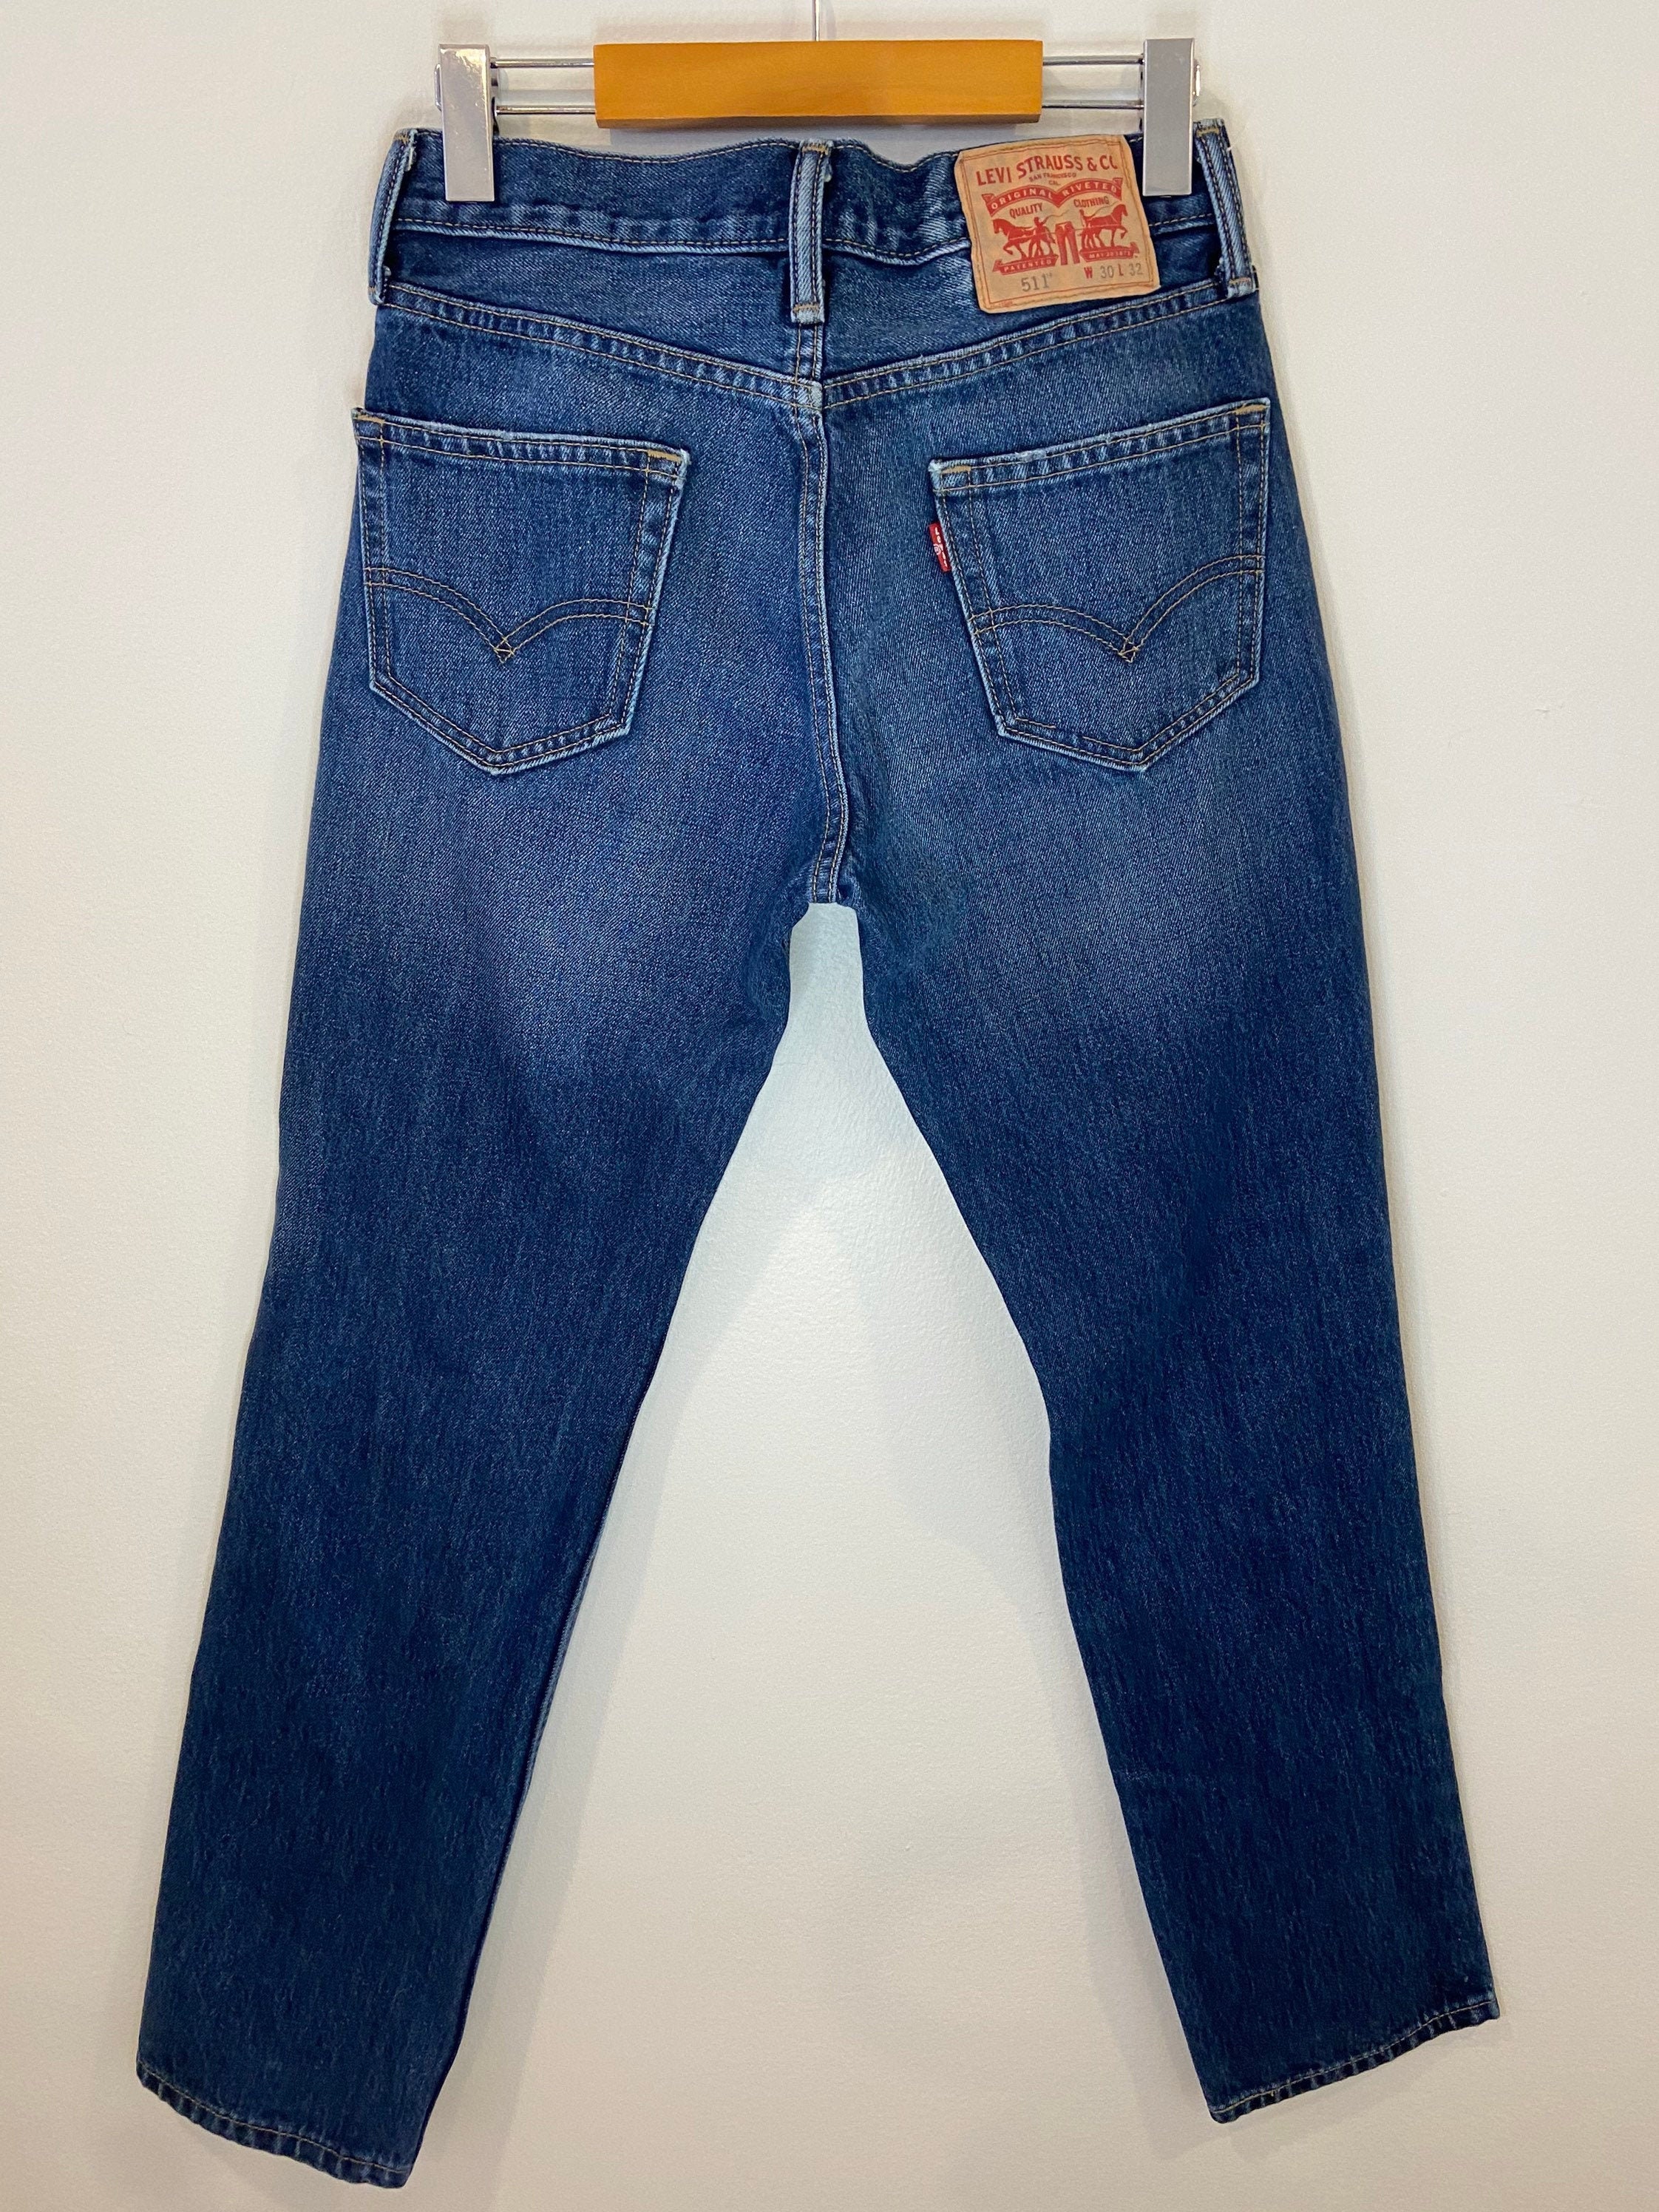 Vintage Levis Jeans Ripped Denim Size W30 L32 Vintage - Etsy Canada